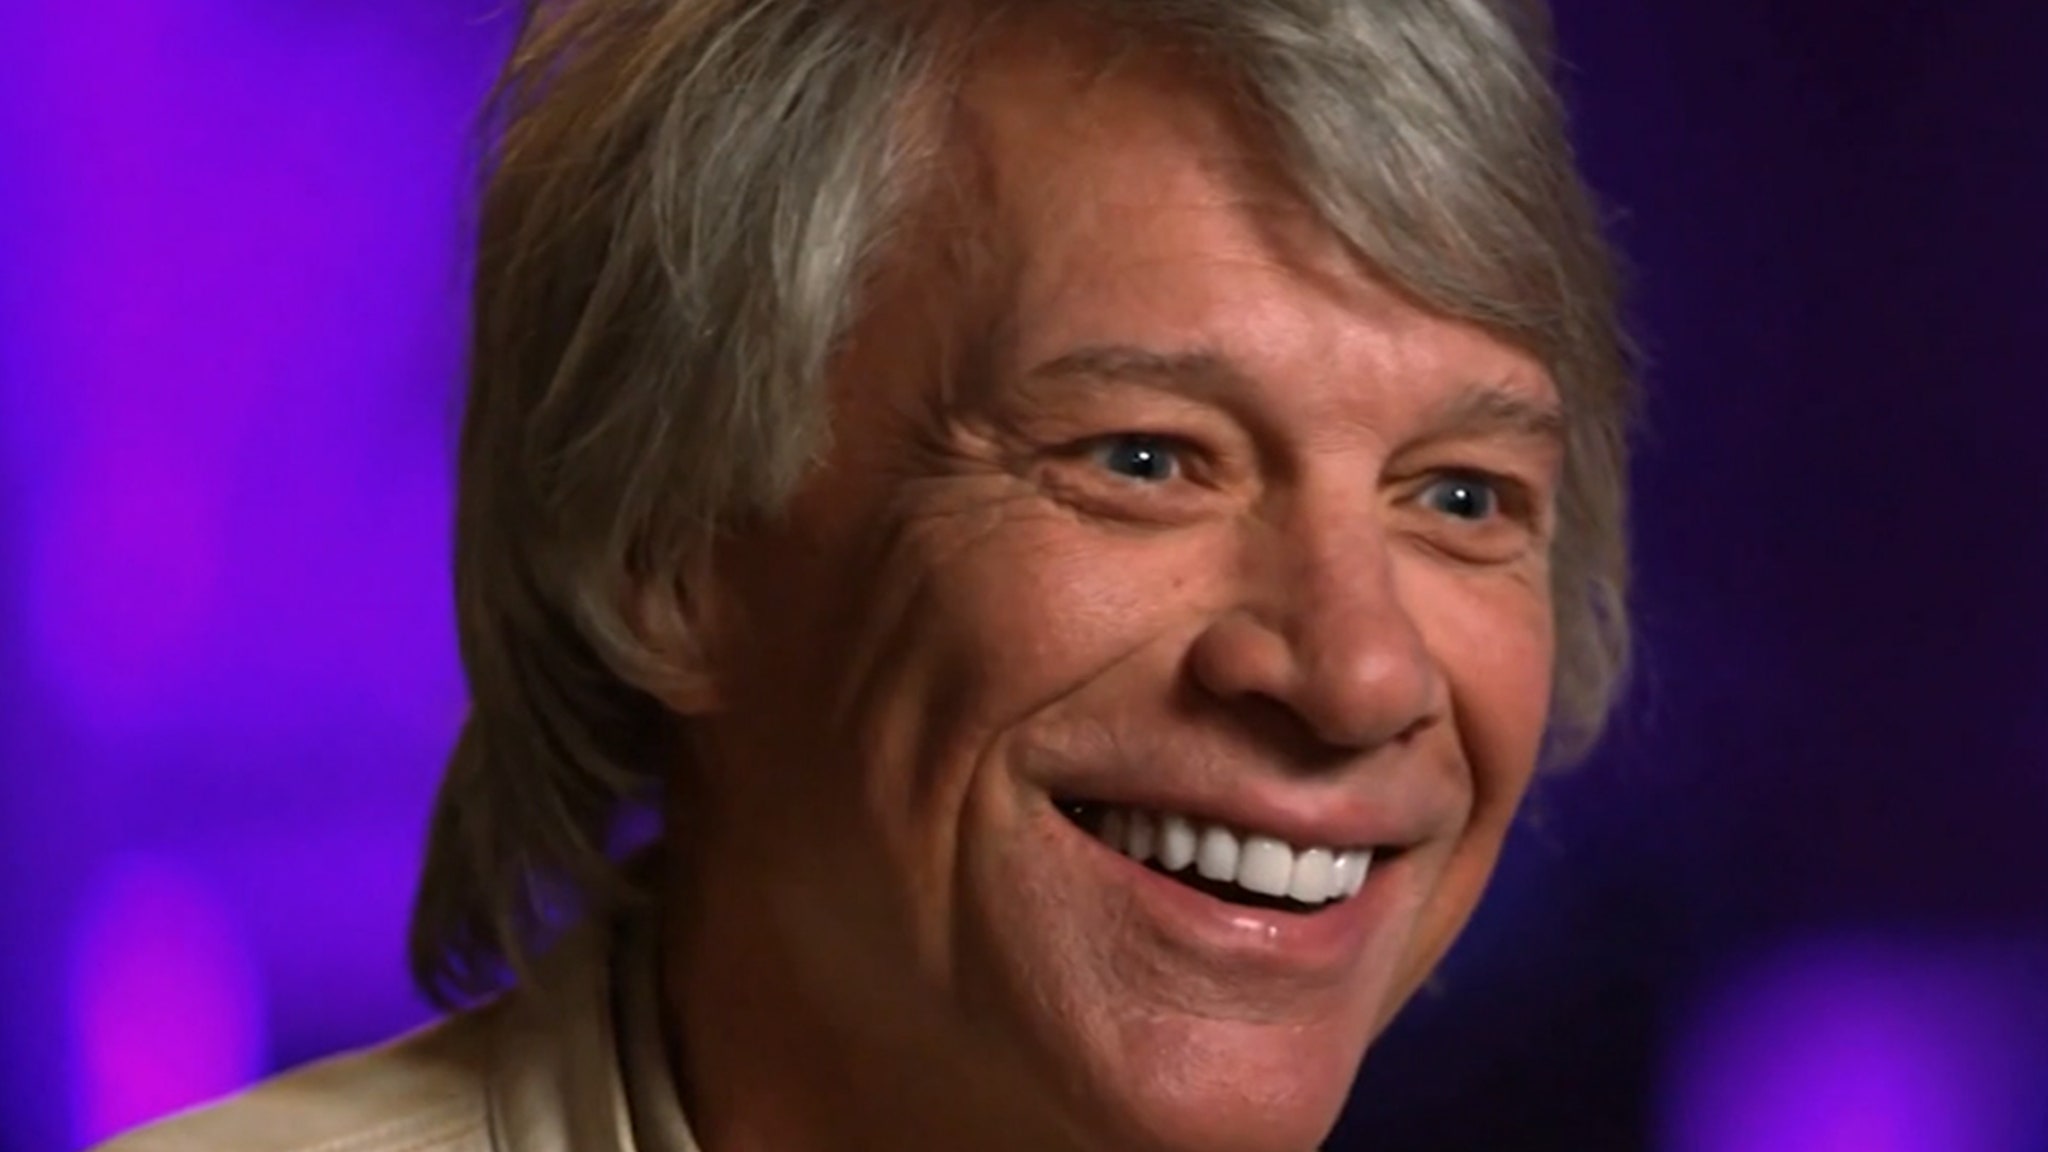 Jon Bon Jovi Says He ‘Got Away With Murder’ During Early Rockstar Days